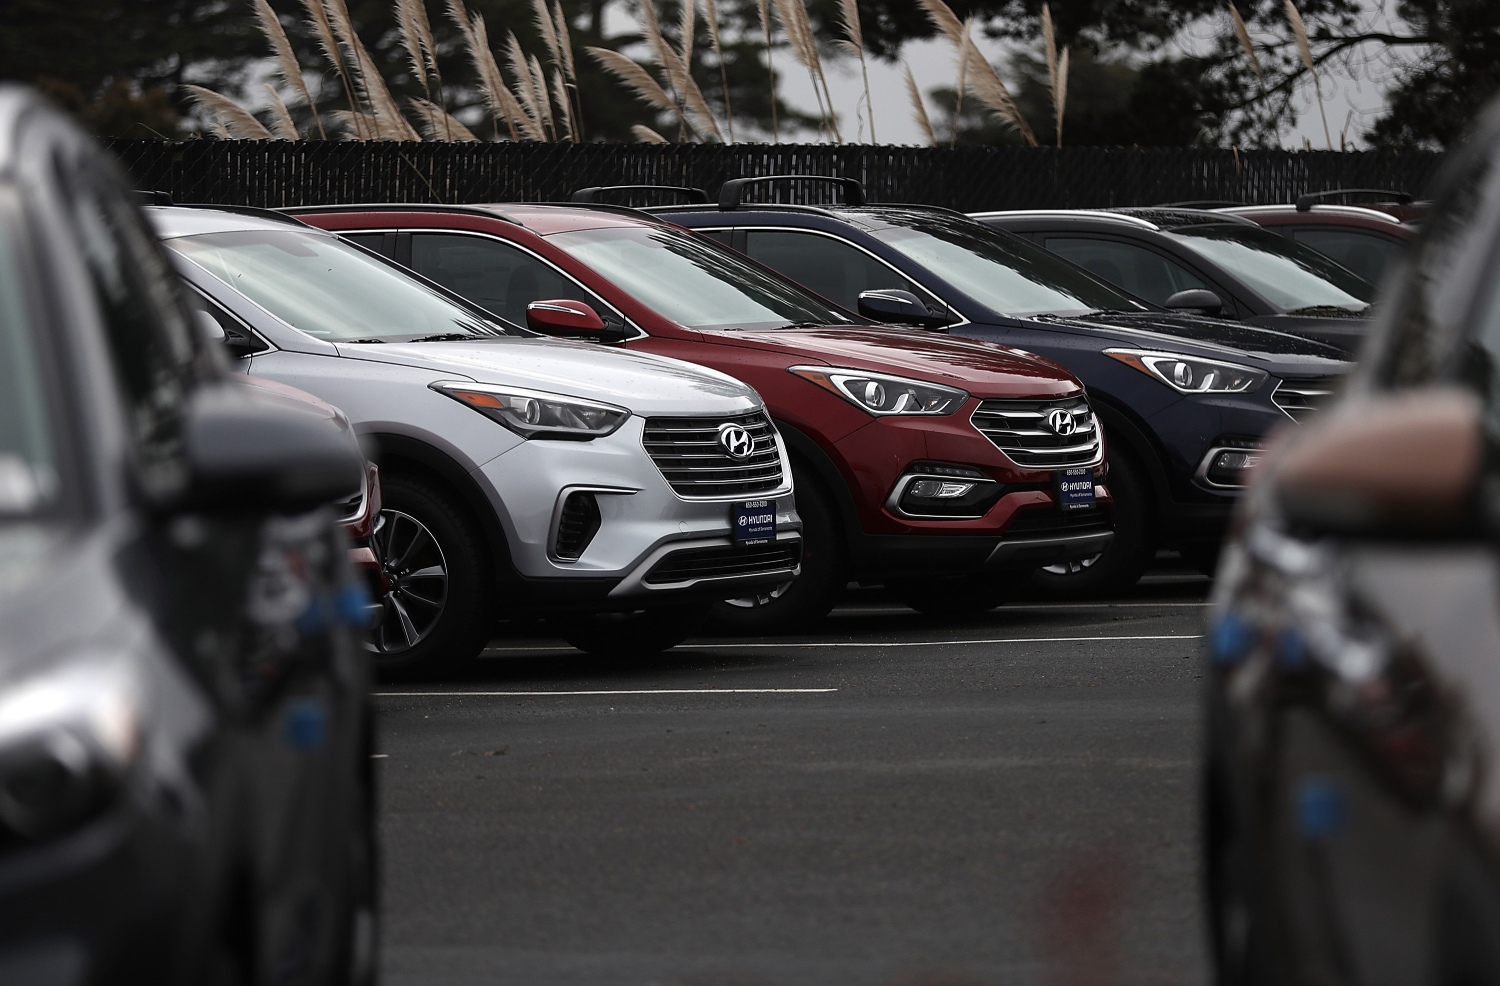 Consumer Reports on the Kia and Hyundai fire risk recalls